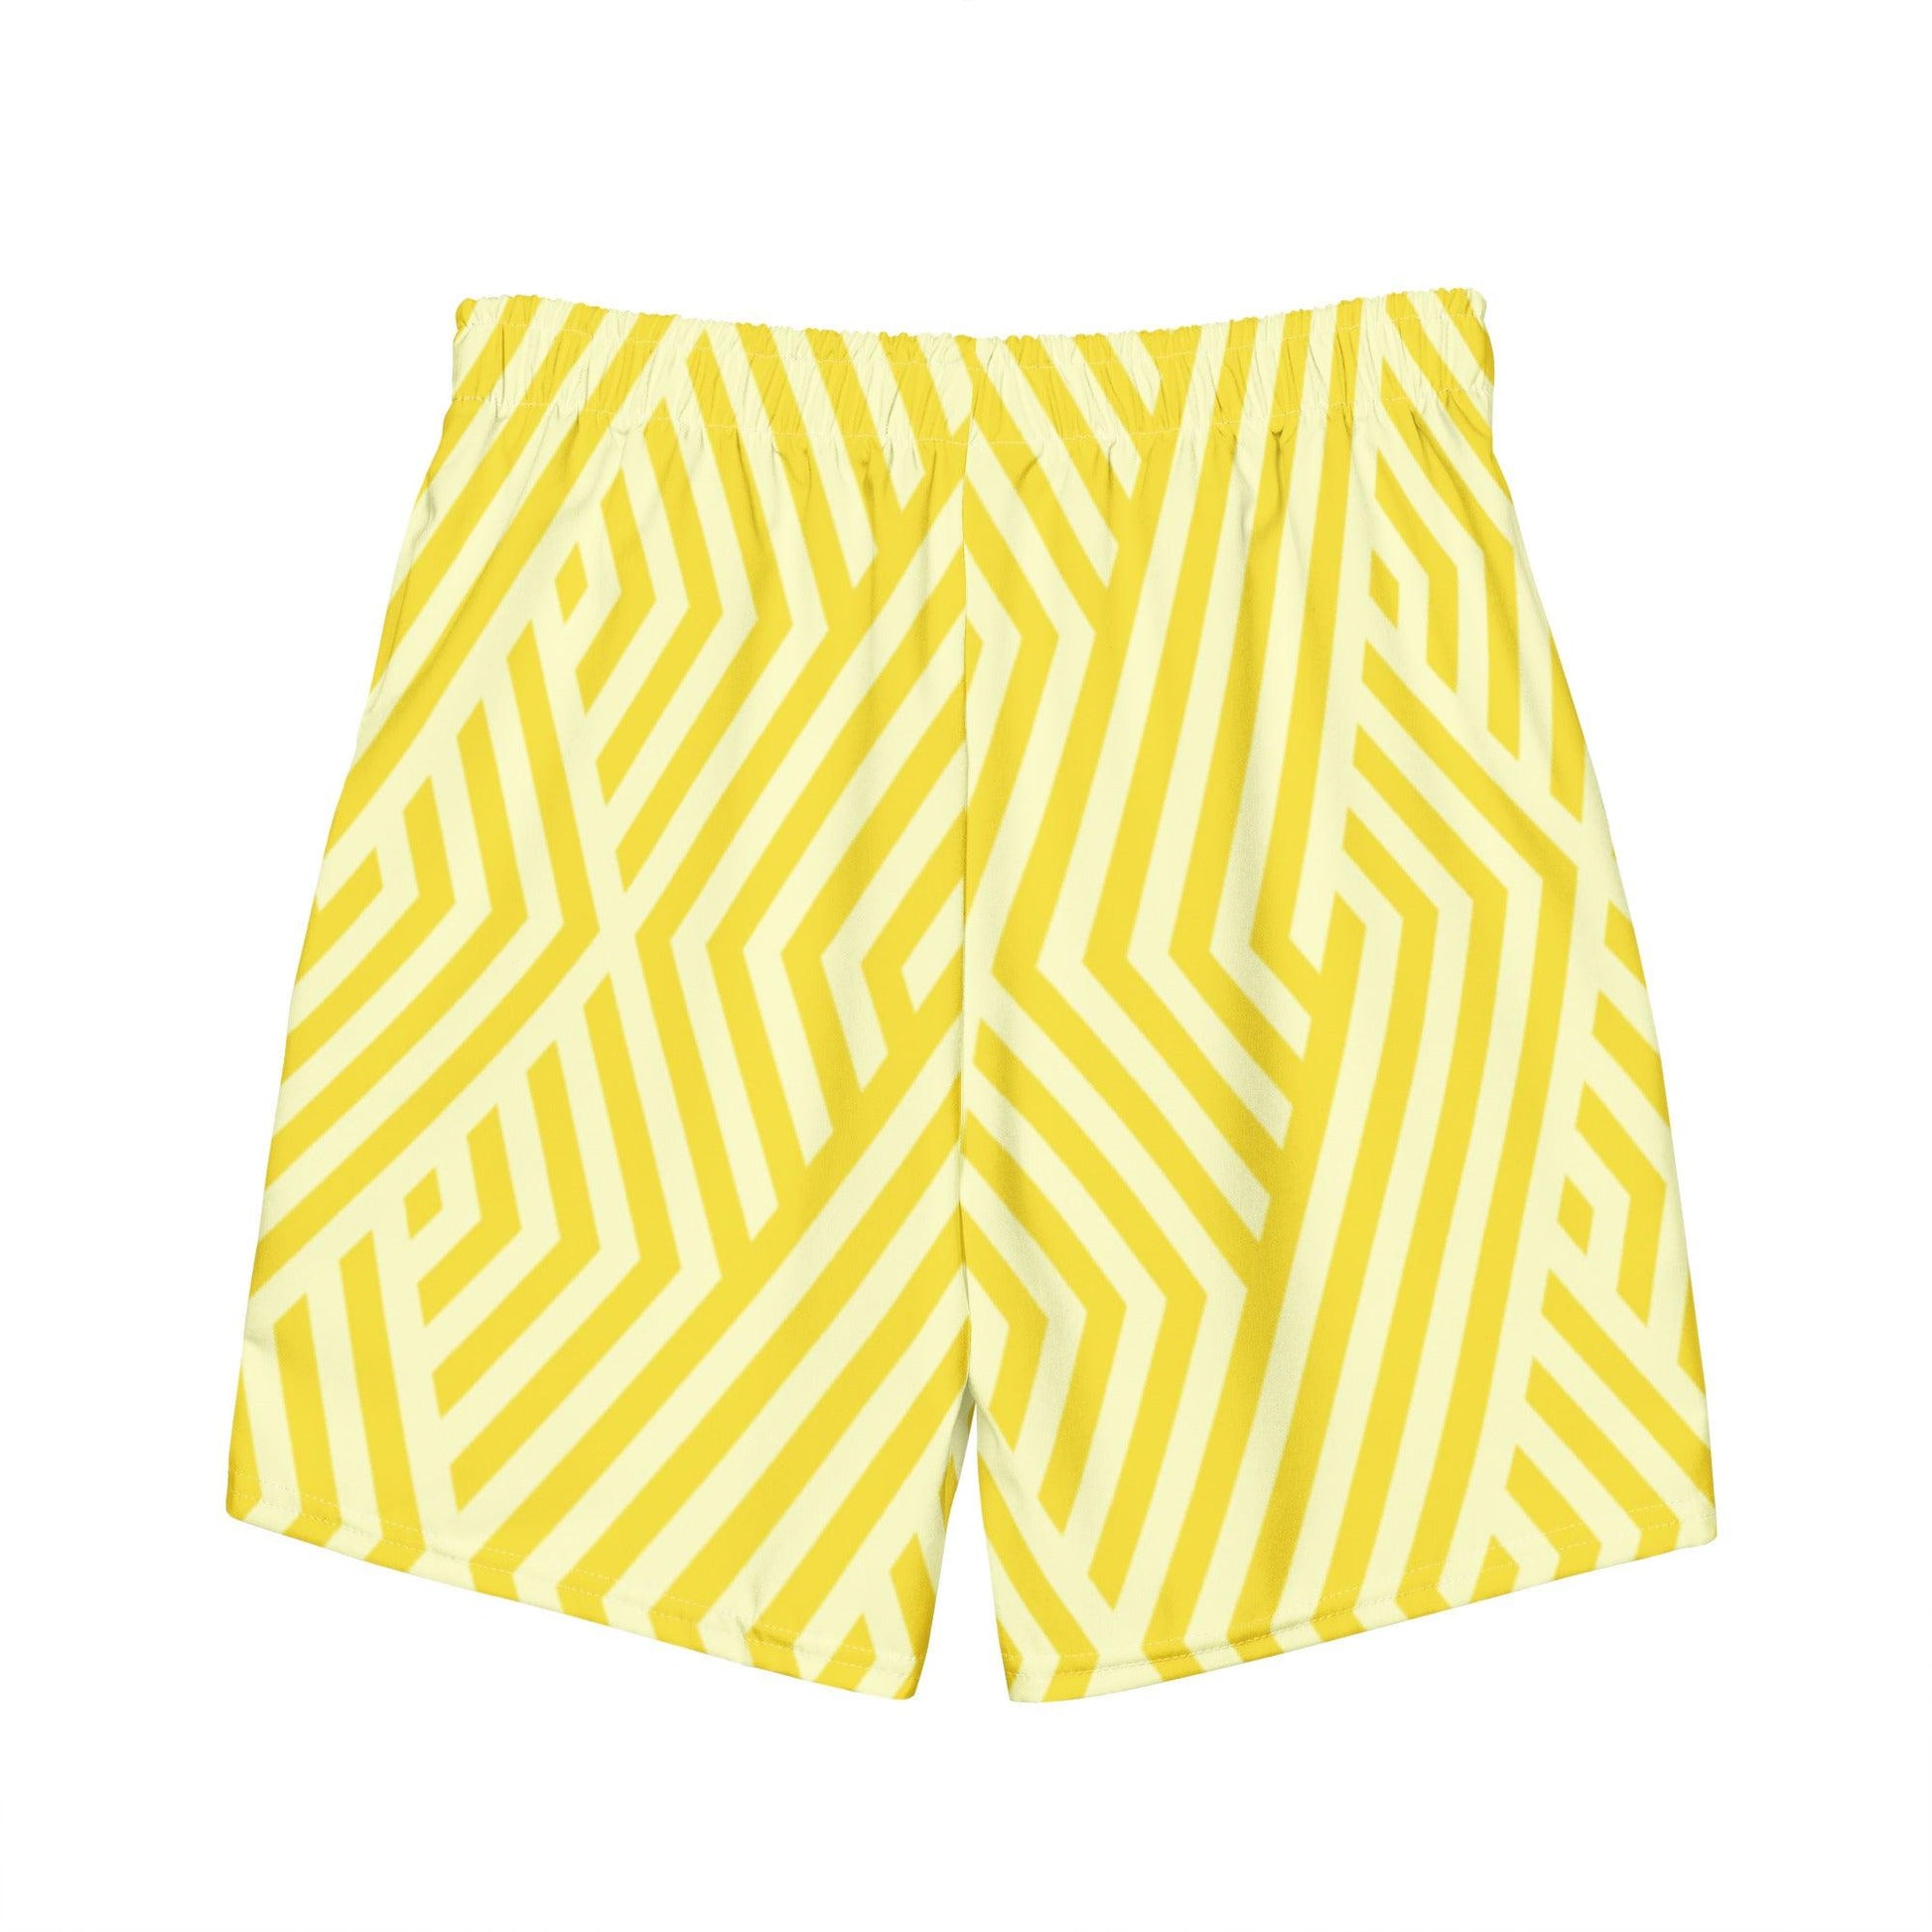 TimothyJames Men's Swim Shorts Yellow - TimothyJames